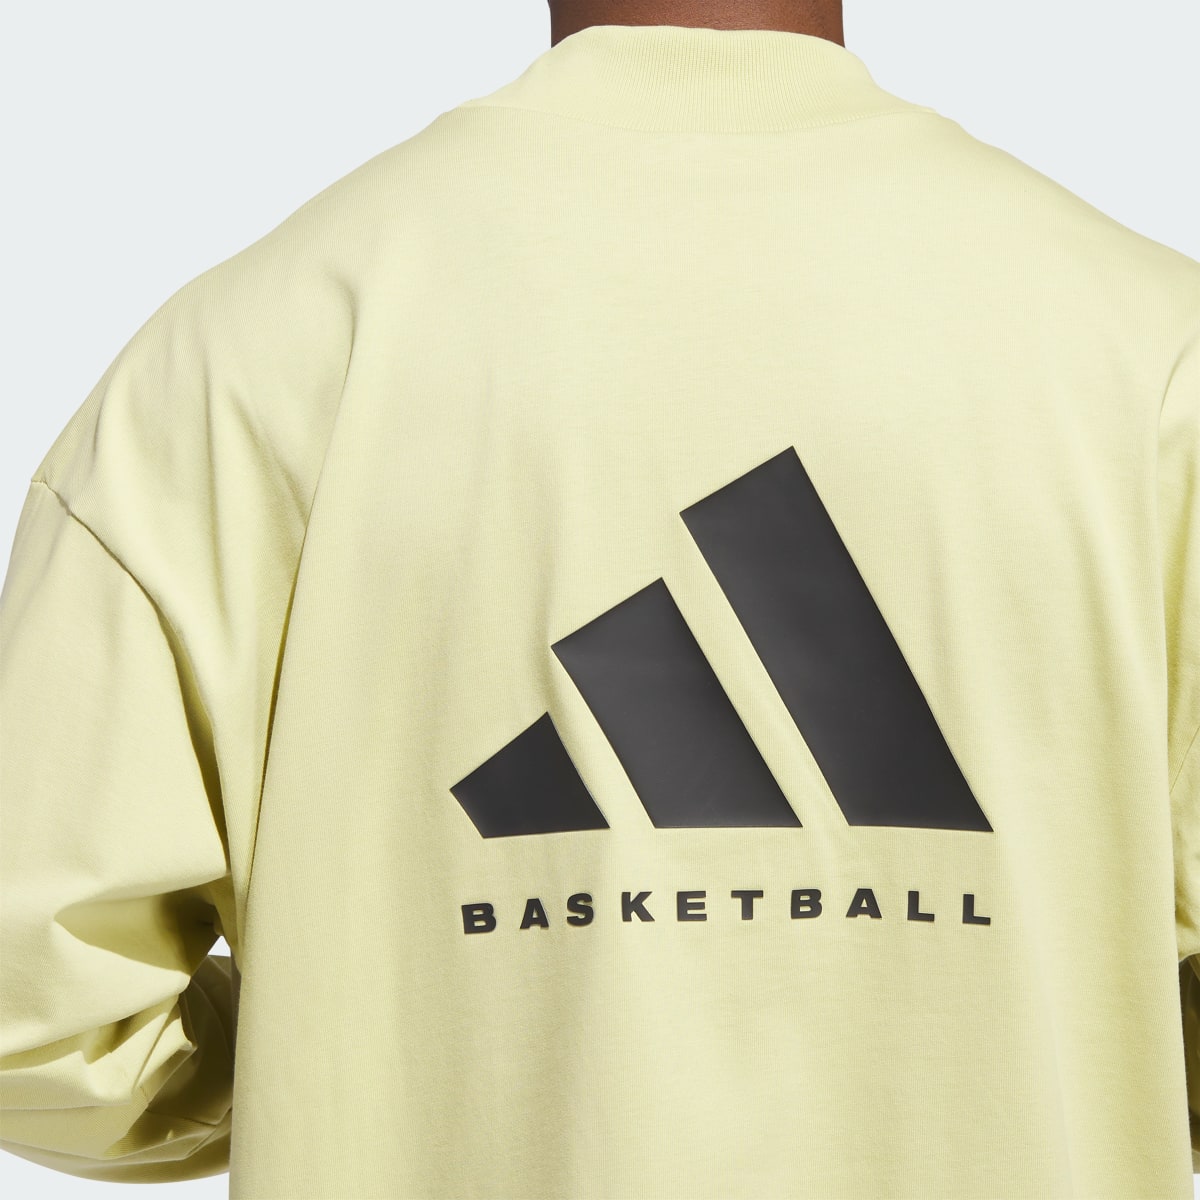 Adidas Basketball Long Sleeve Long-Sleeve Top. 7